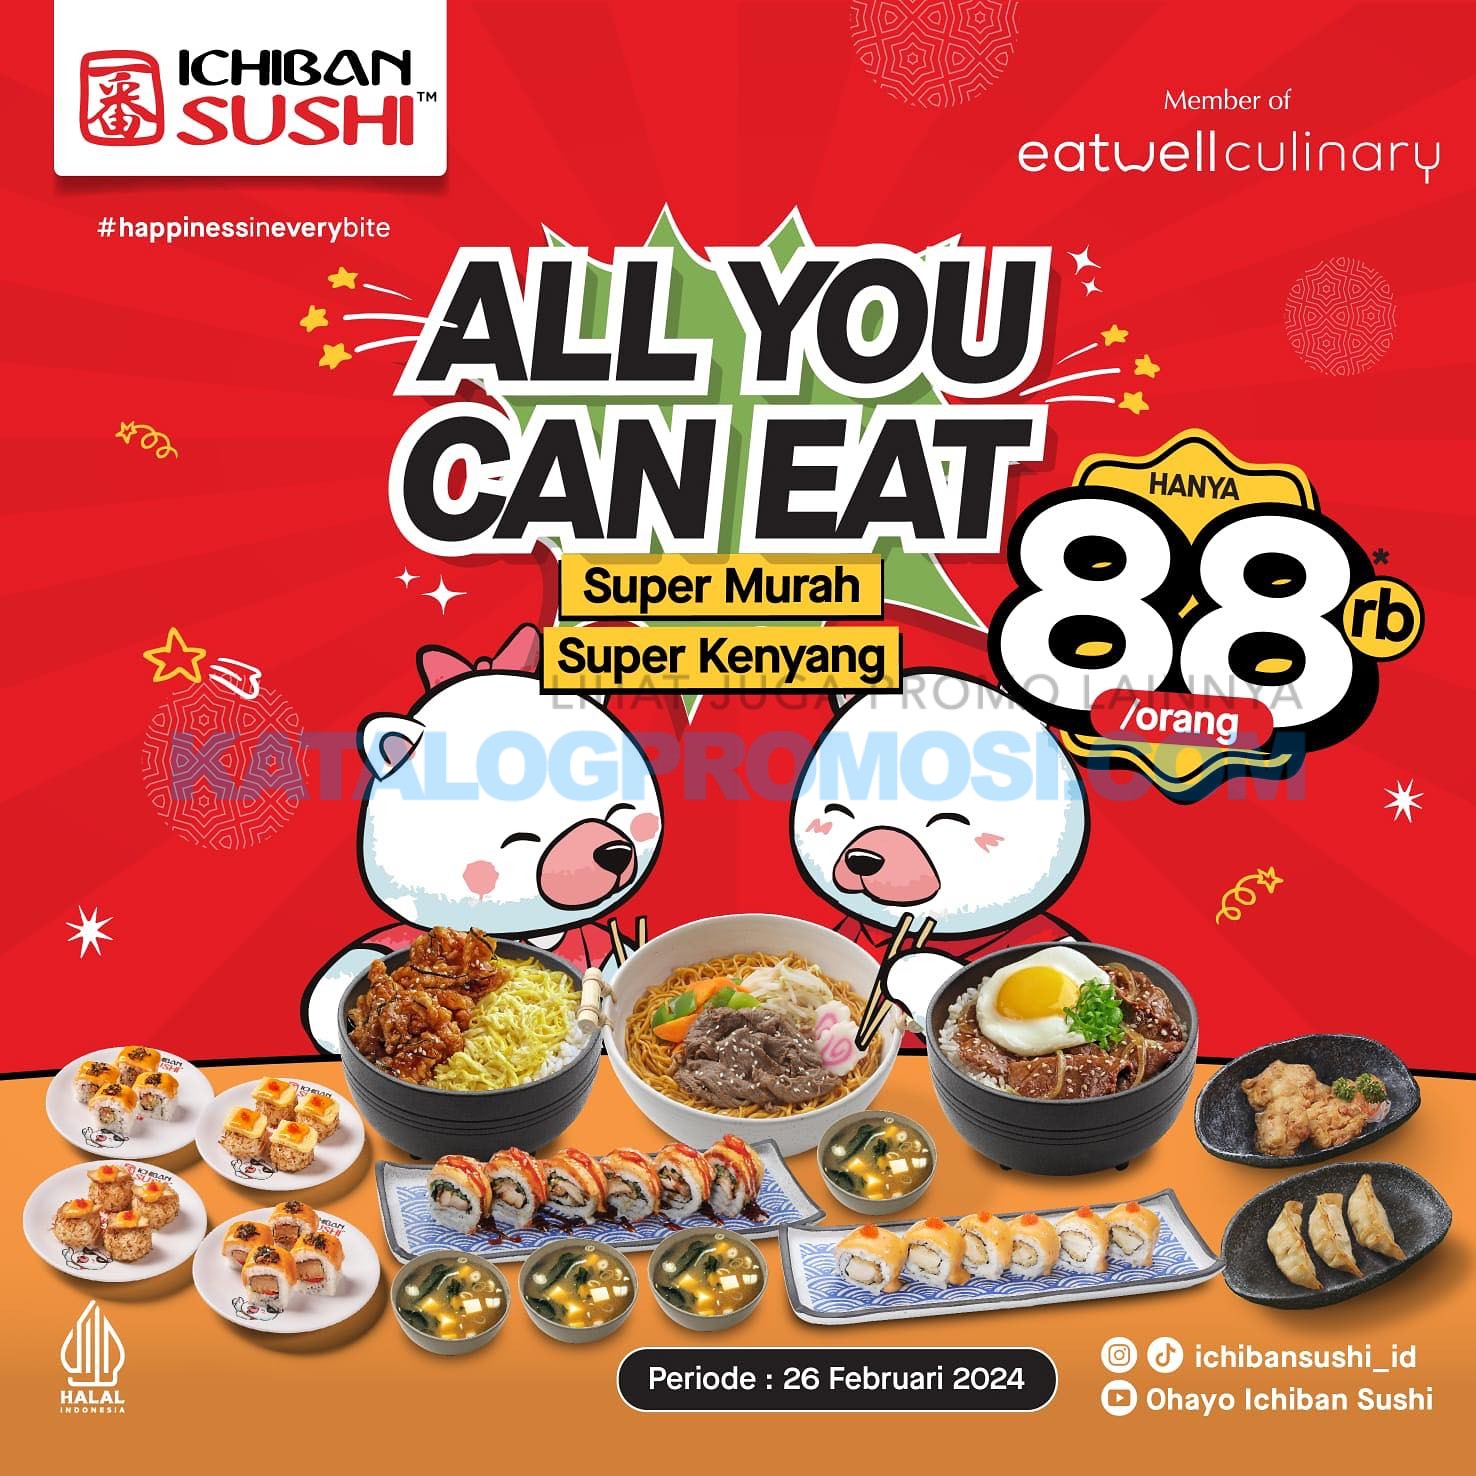 Promo ICHIBAN SUSHI ALL YOU CAN EAT cuma Rp. 88RIBU AJA PER ORANG berlaku hanya 1 hari, tanggal 26 Februari 2024